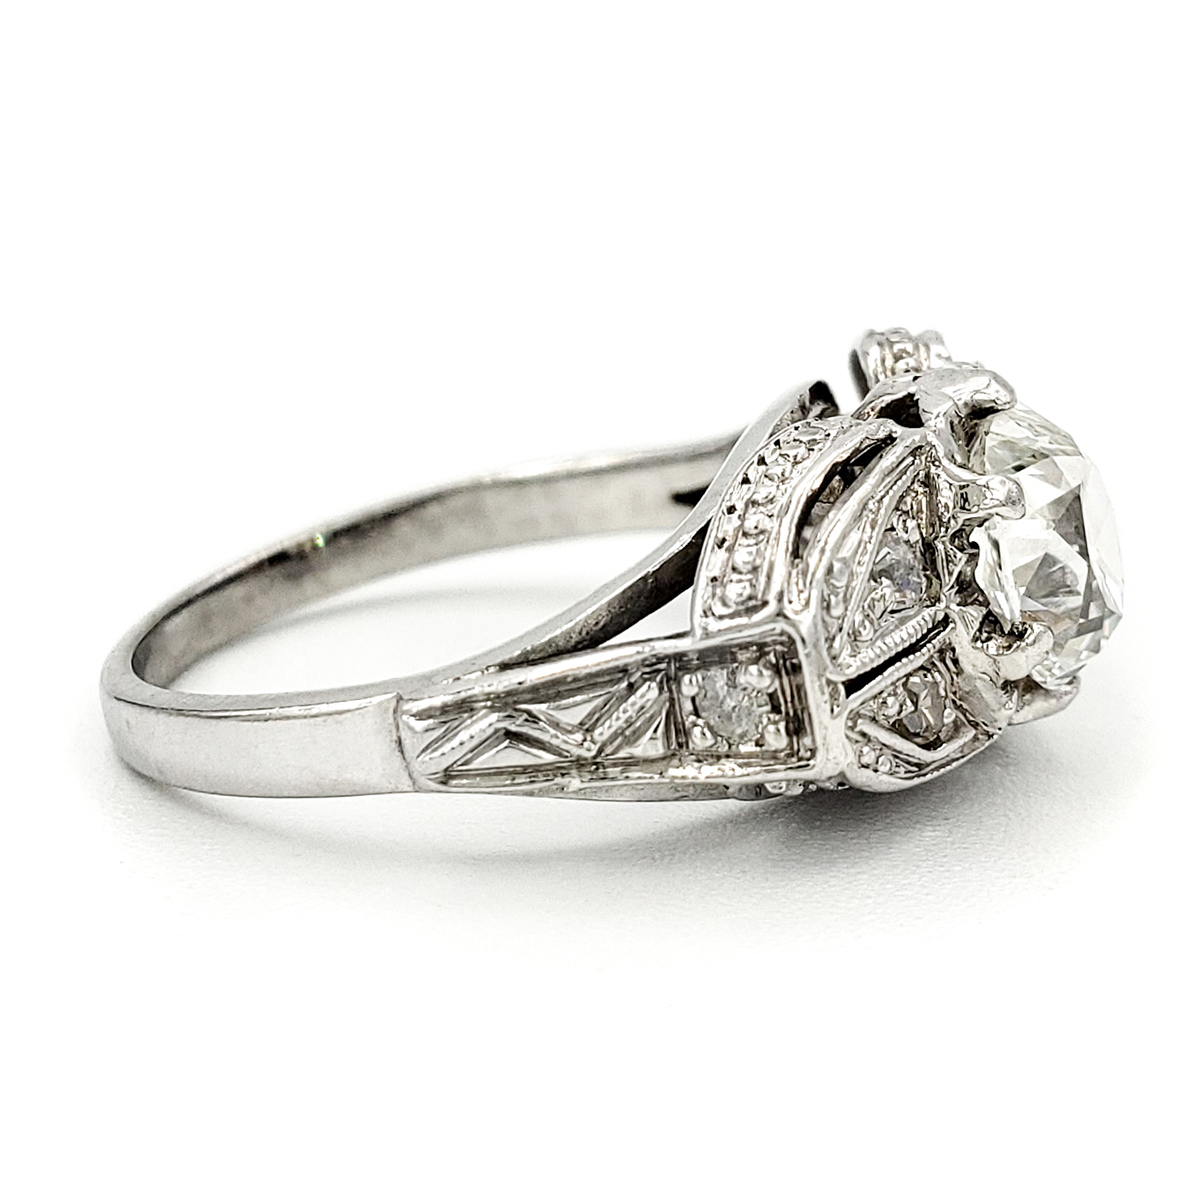 Vintage Platinum Engagement Ring With 0.94 Carat Old Mine Cut Diamond ...
